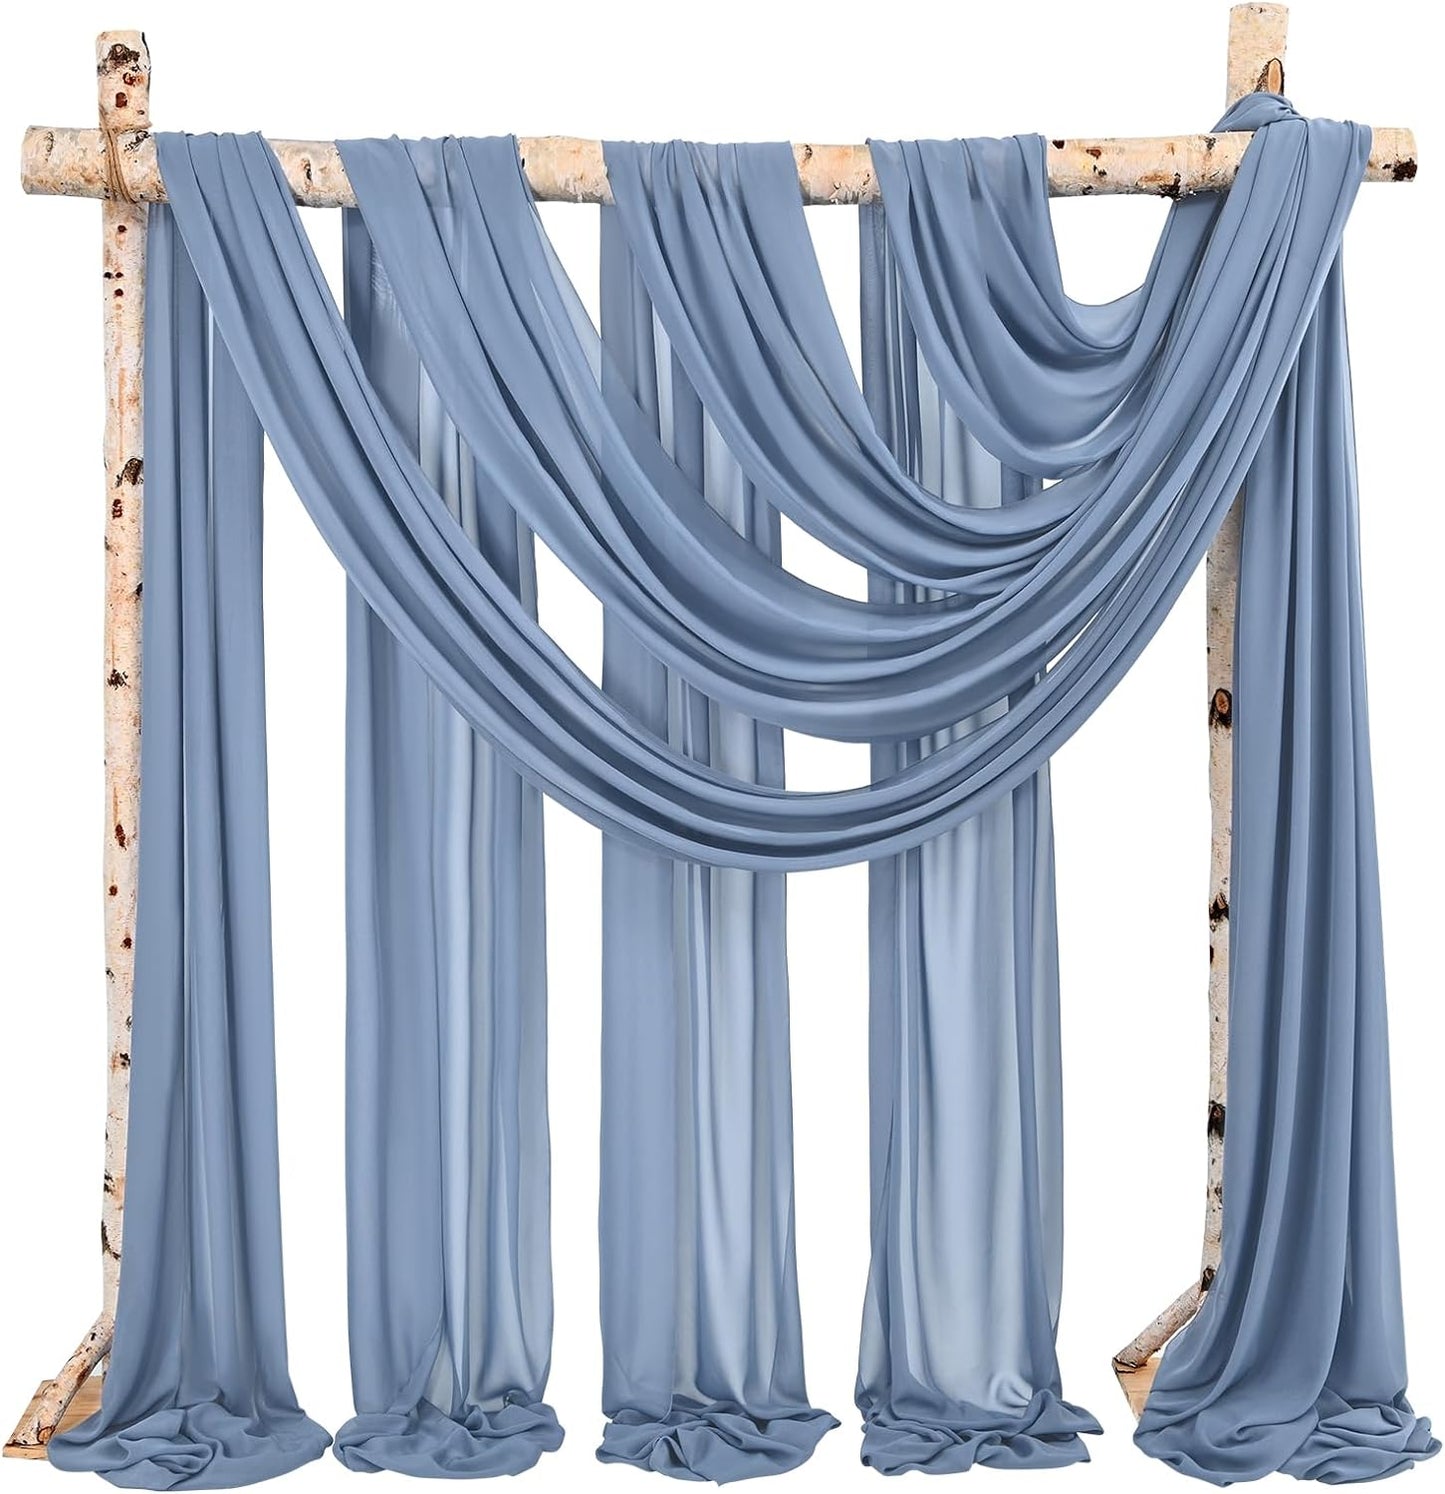 MORLIN Wholesale Wedding Arch Draping Fabric